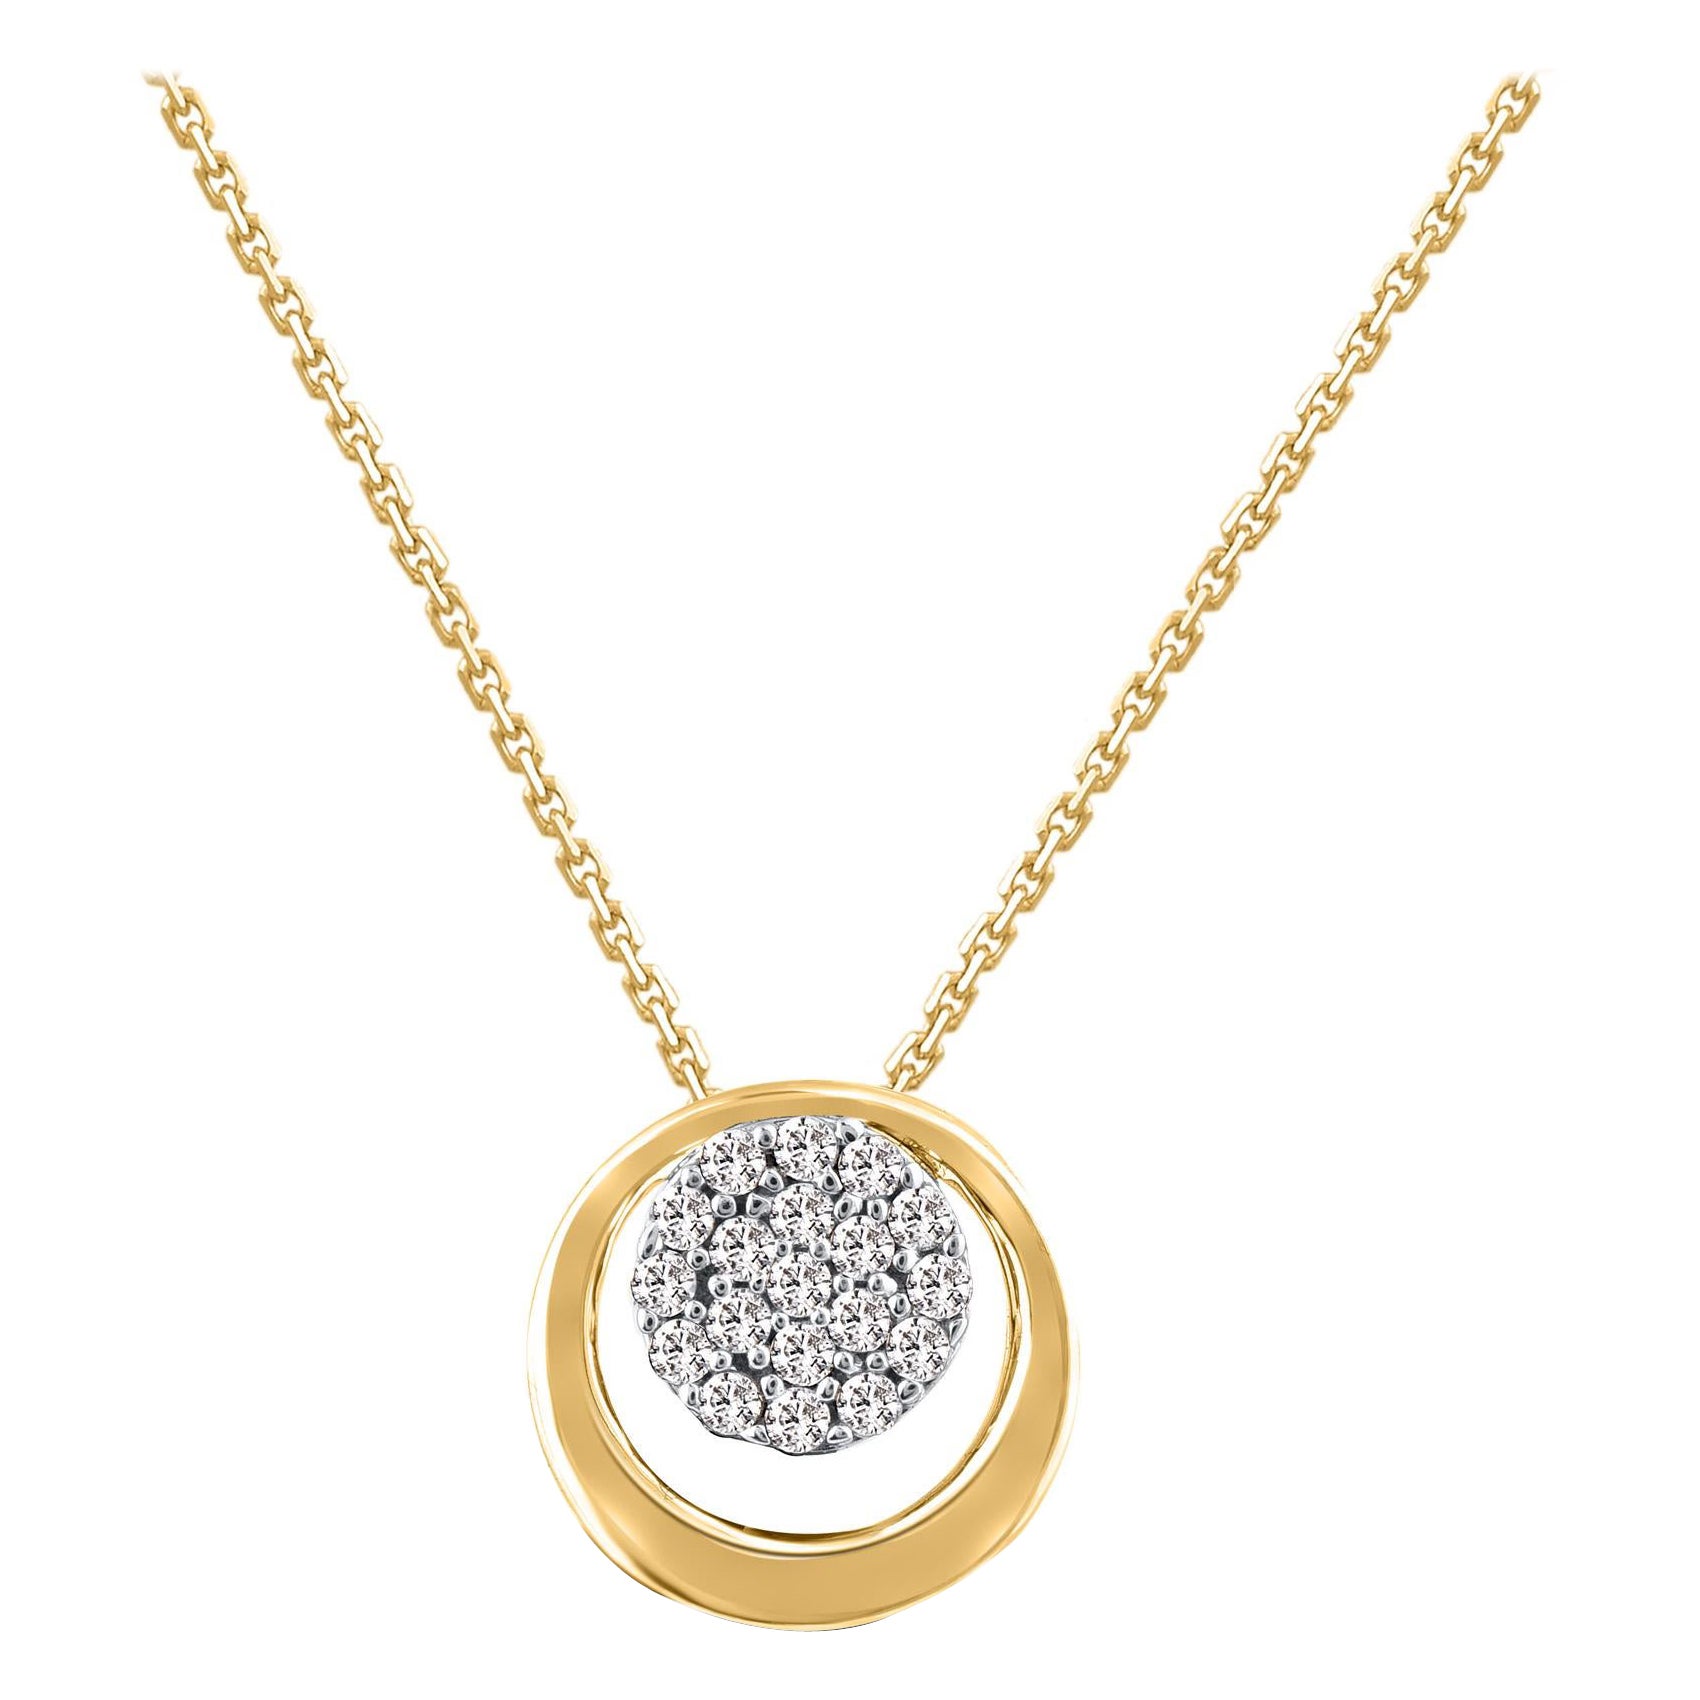 TJD 0.15 Carat Brilliant Cut Diamond 14KT Yellow Gold Circle Pendant Necklace For Sale